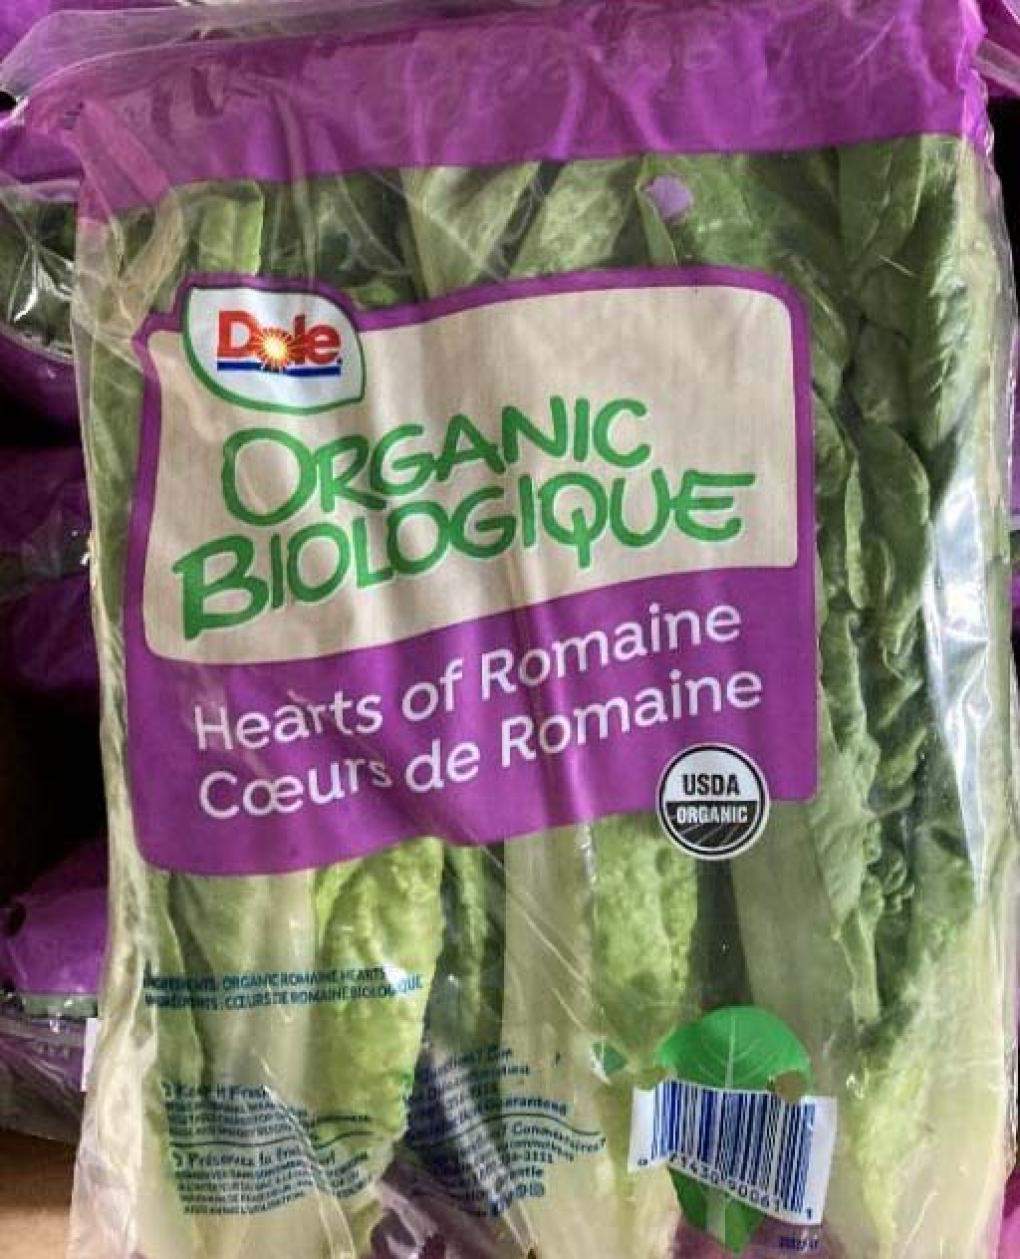 Romaine lettuce hearts recalled due to potential E. coli risk